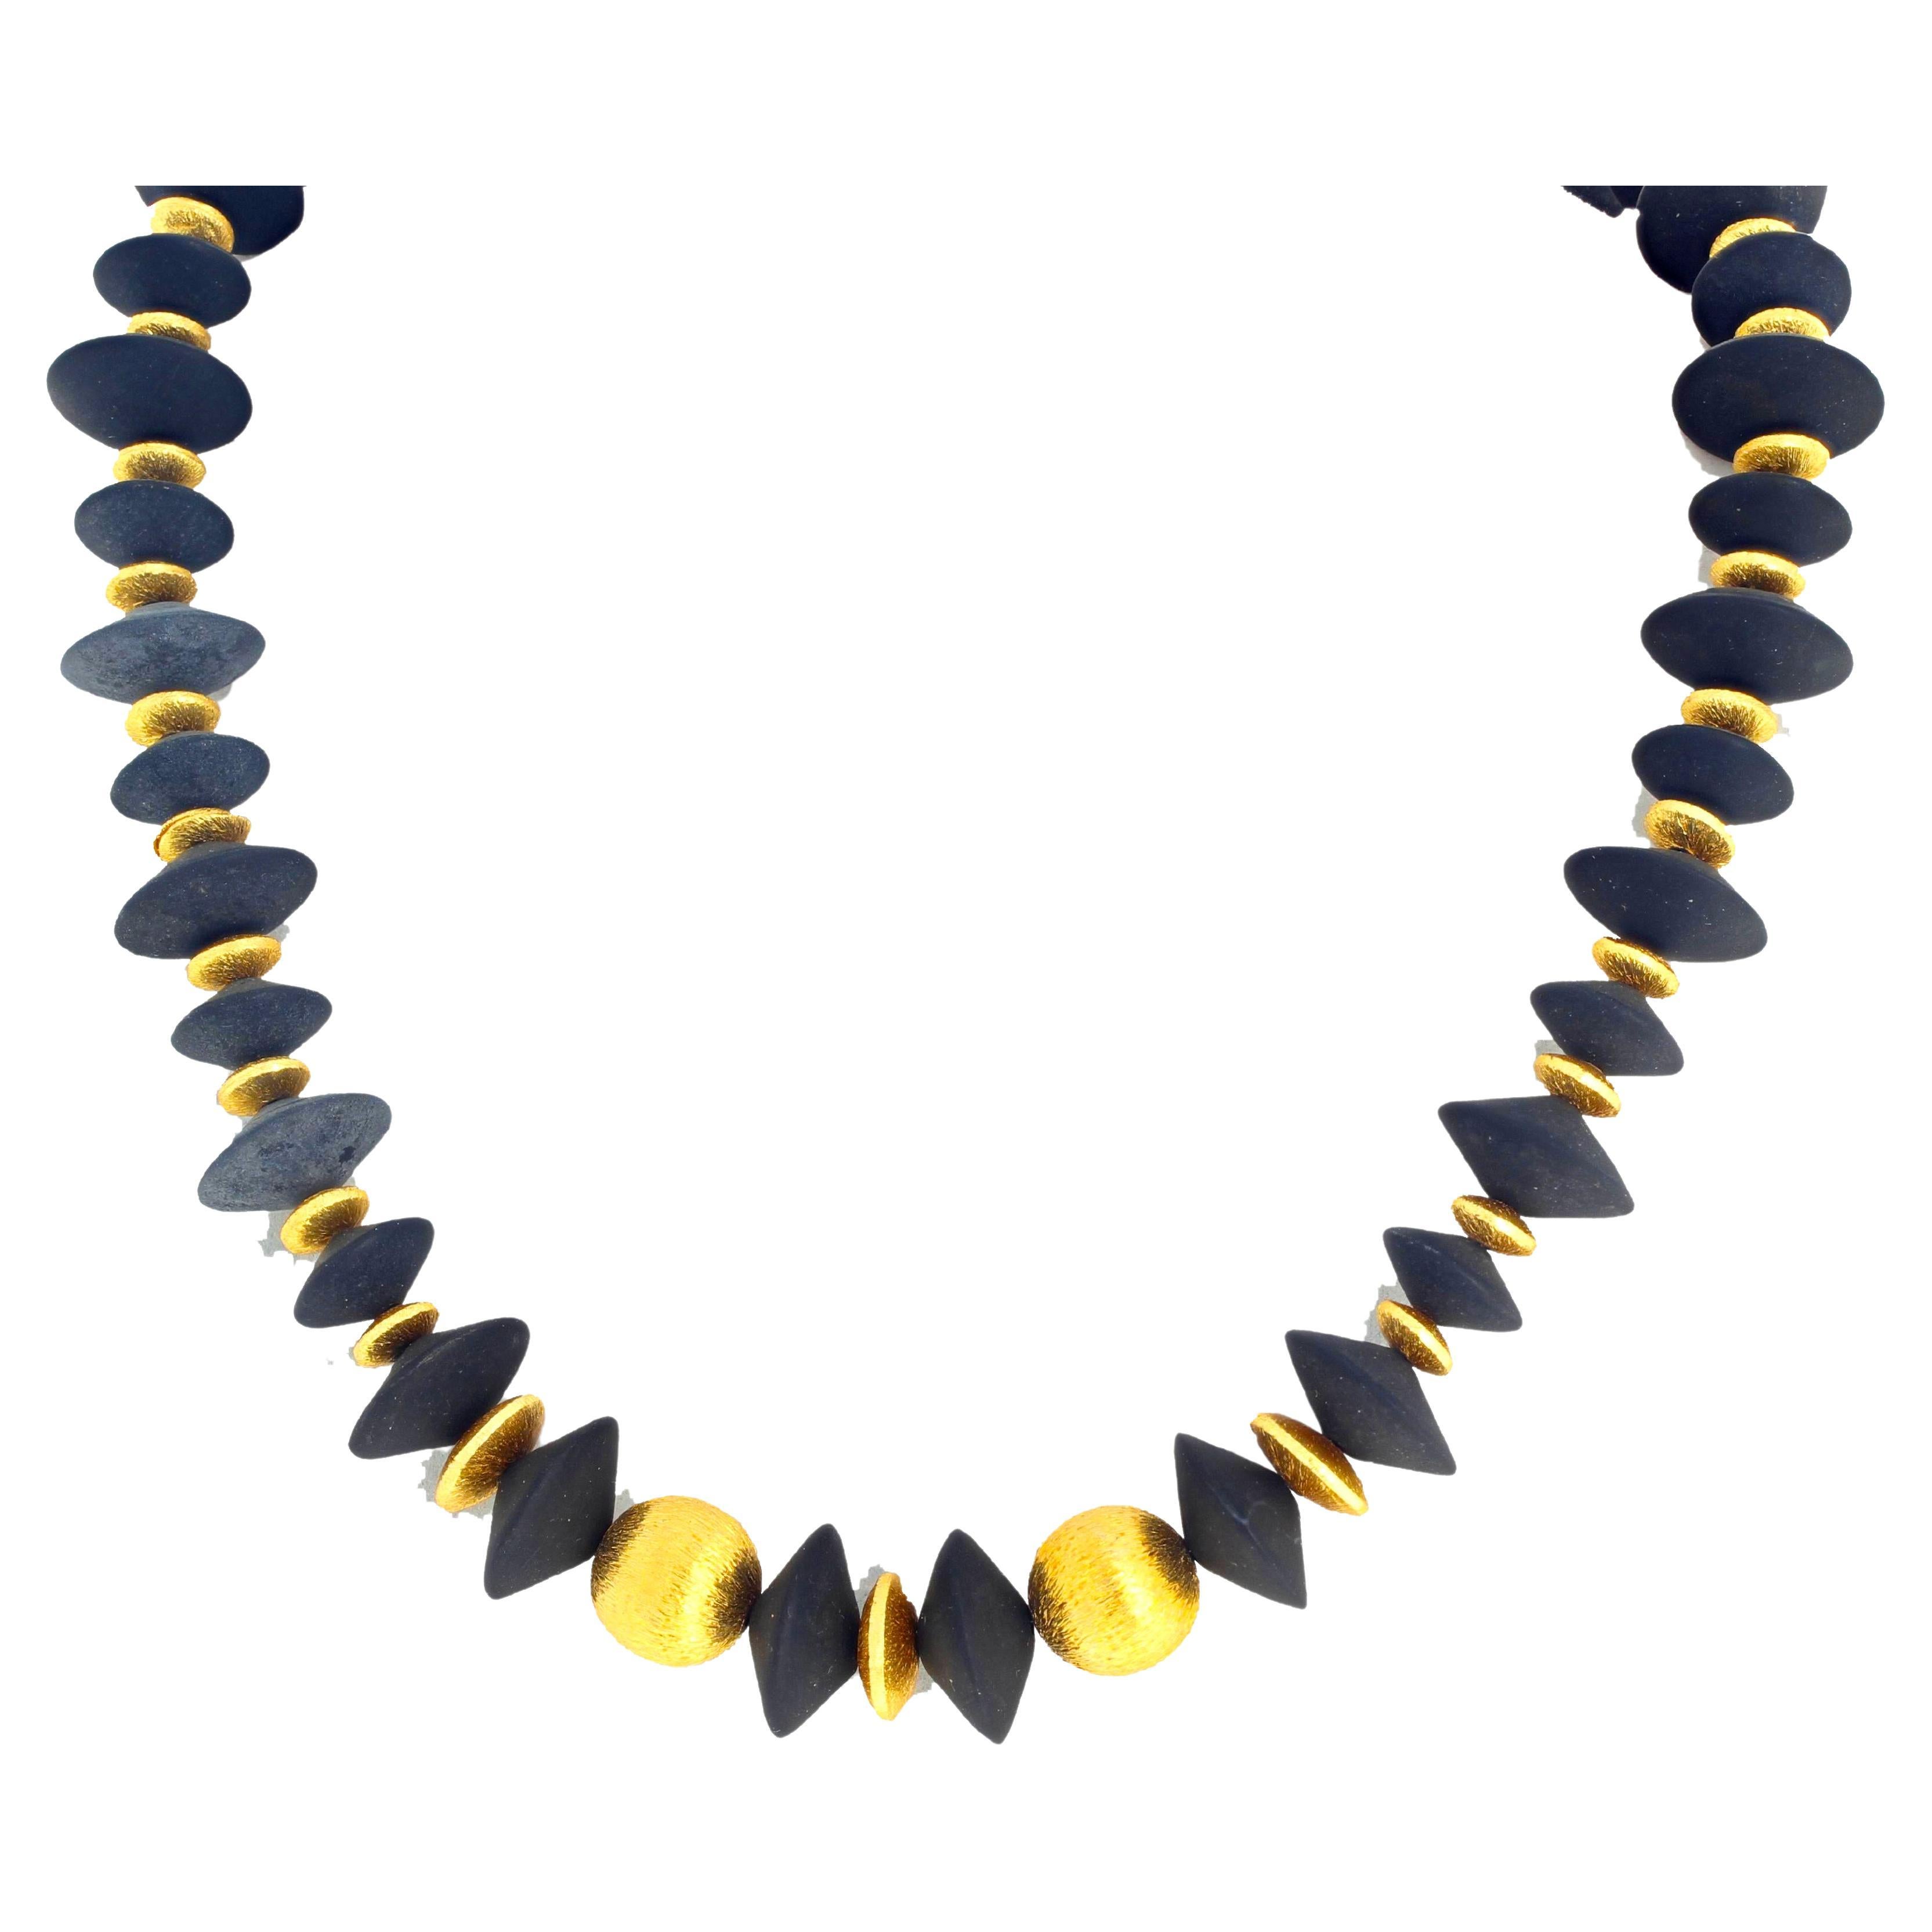 AJD ELEGANT Dramatic Unique Gold Plated Rondels & Black Onyx Necklace